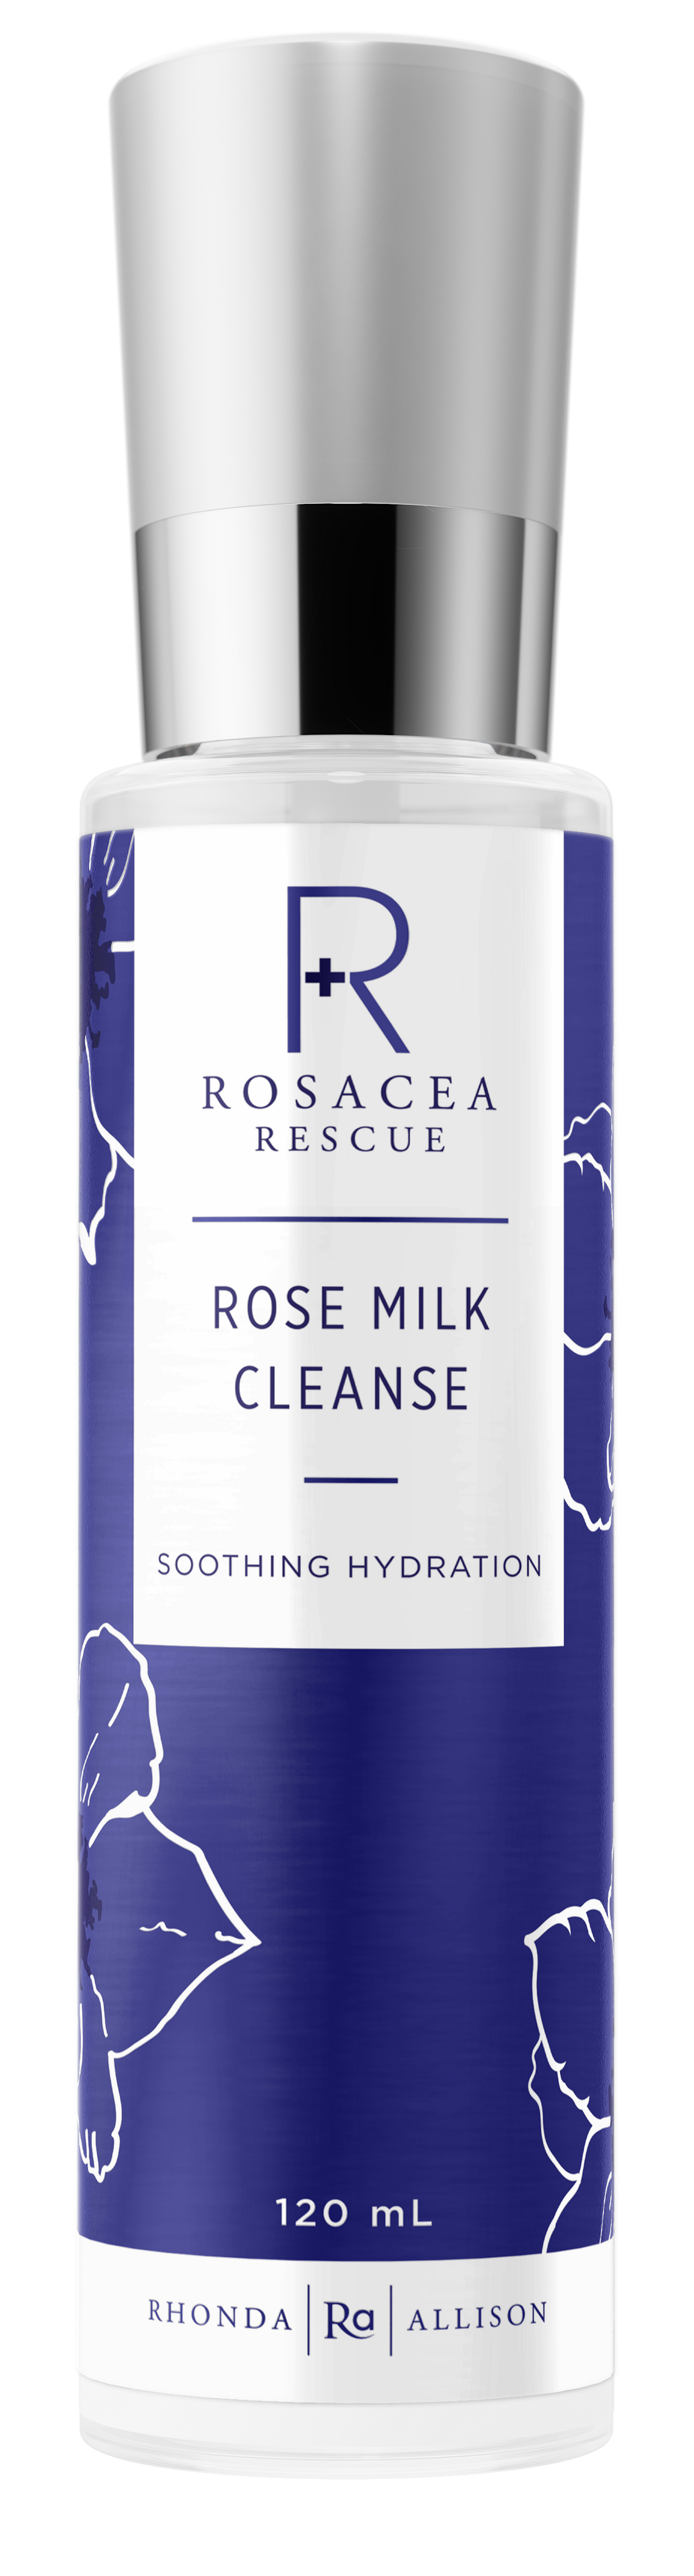 Rose Milk Cleanse - 15% off